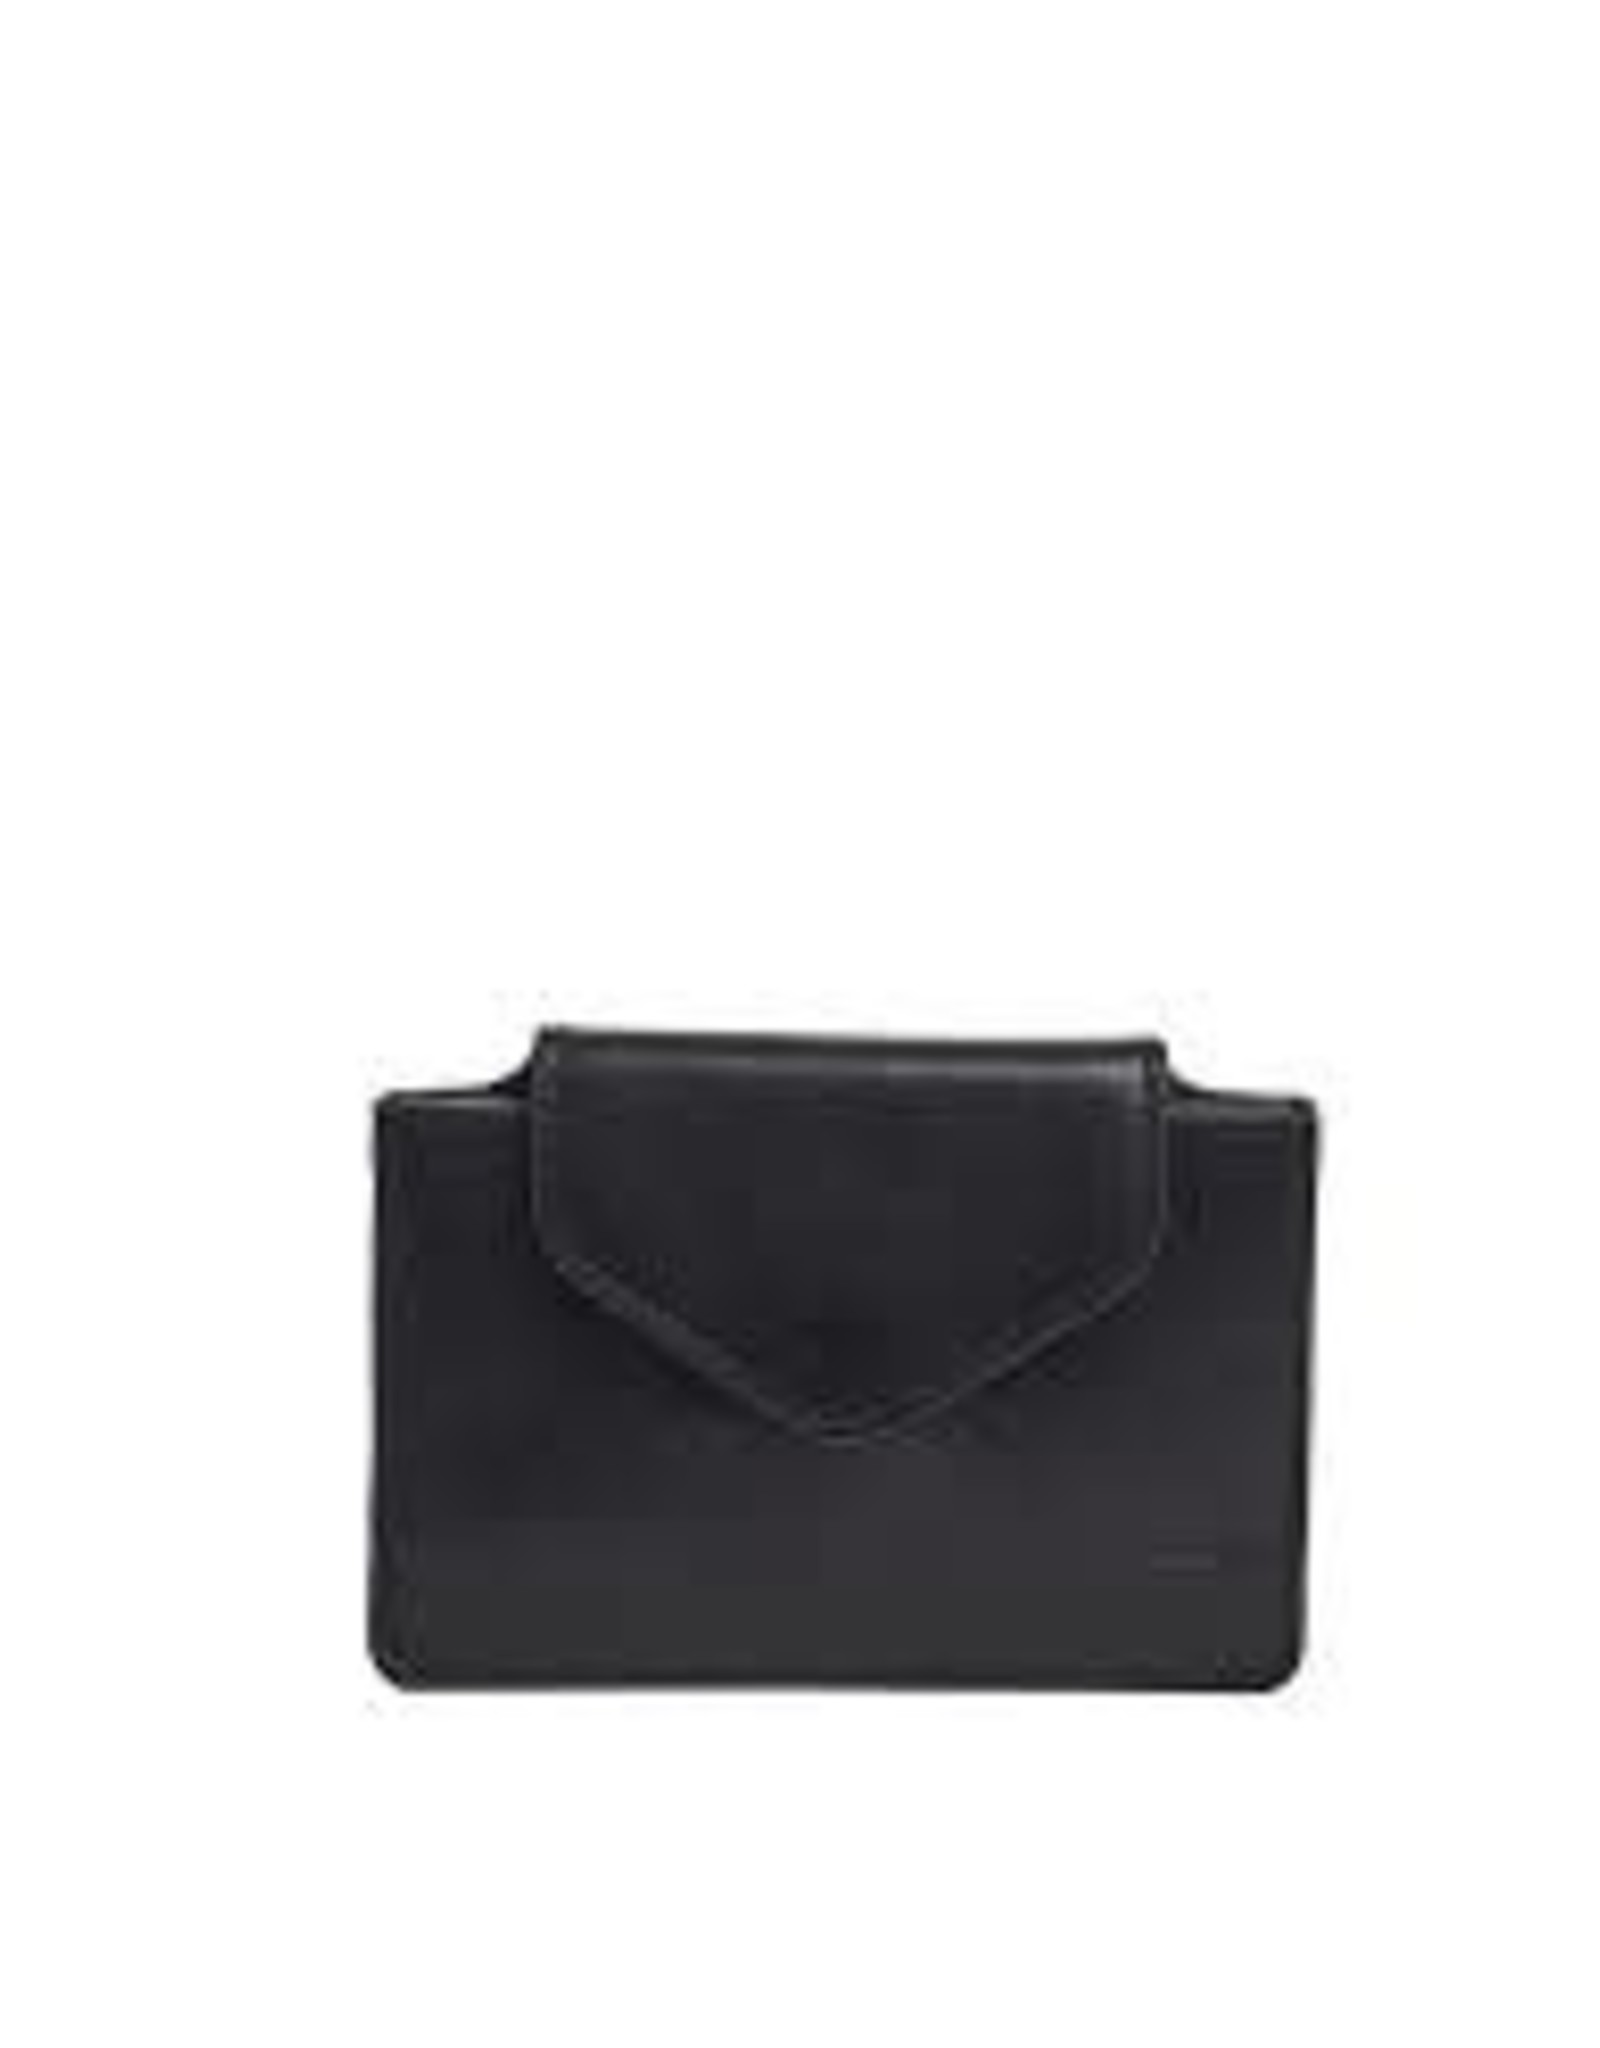 O My Bag O My Bag - Harmonica wallet - Black classic leather